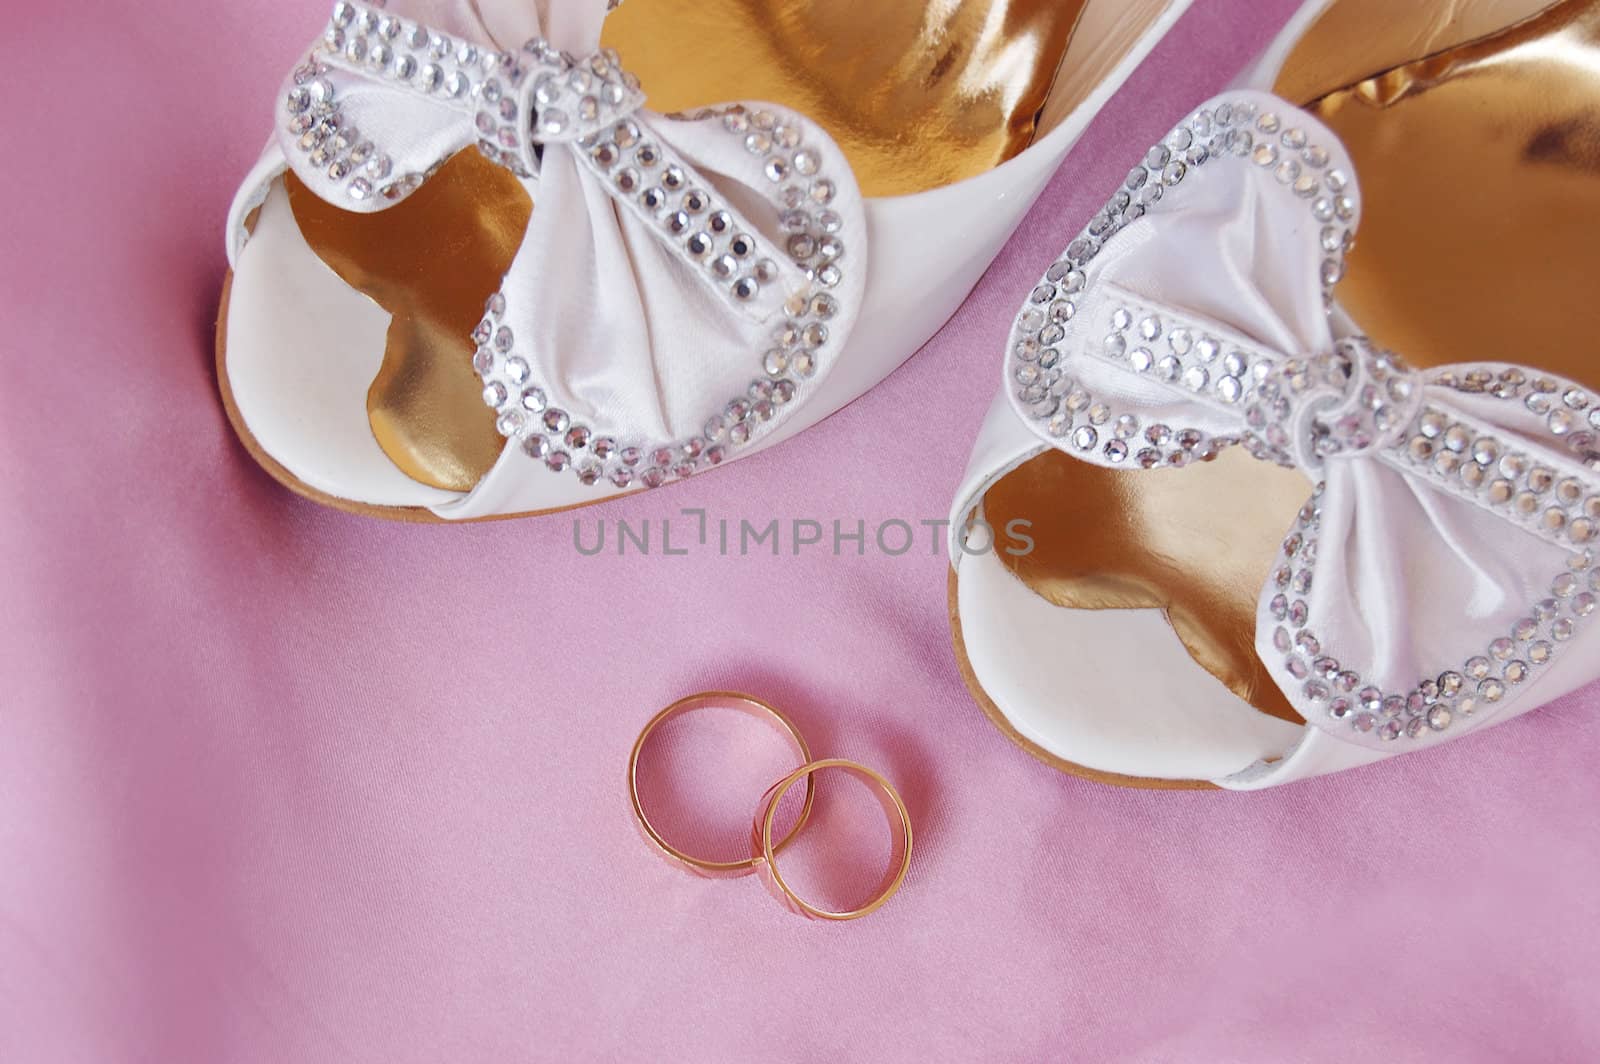 bridal shoe heel on wedding rings, pink background